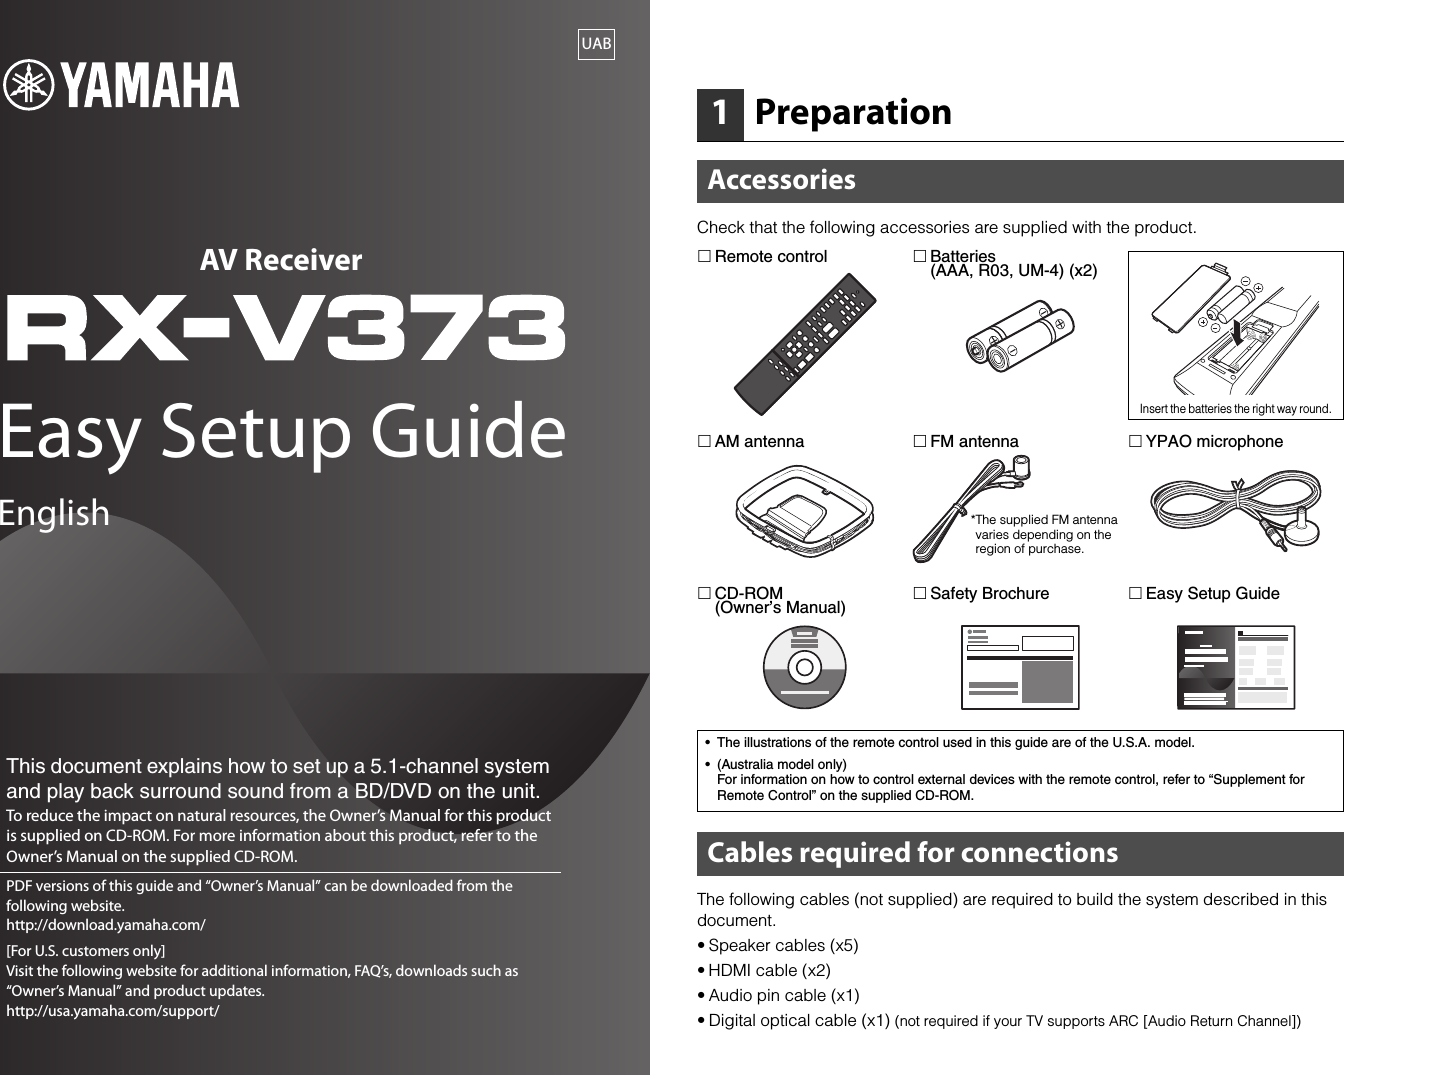 Yamaha receiver setup guide